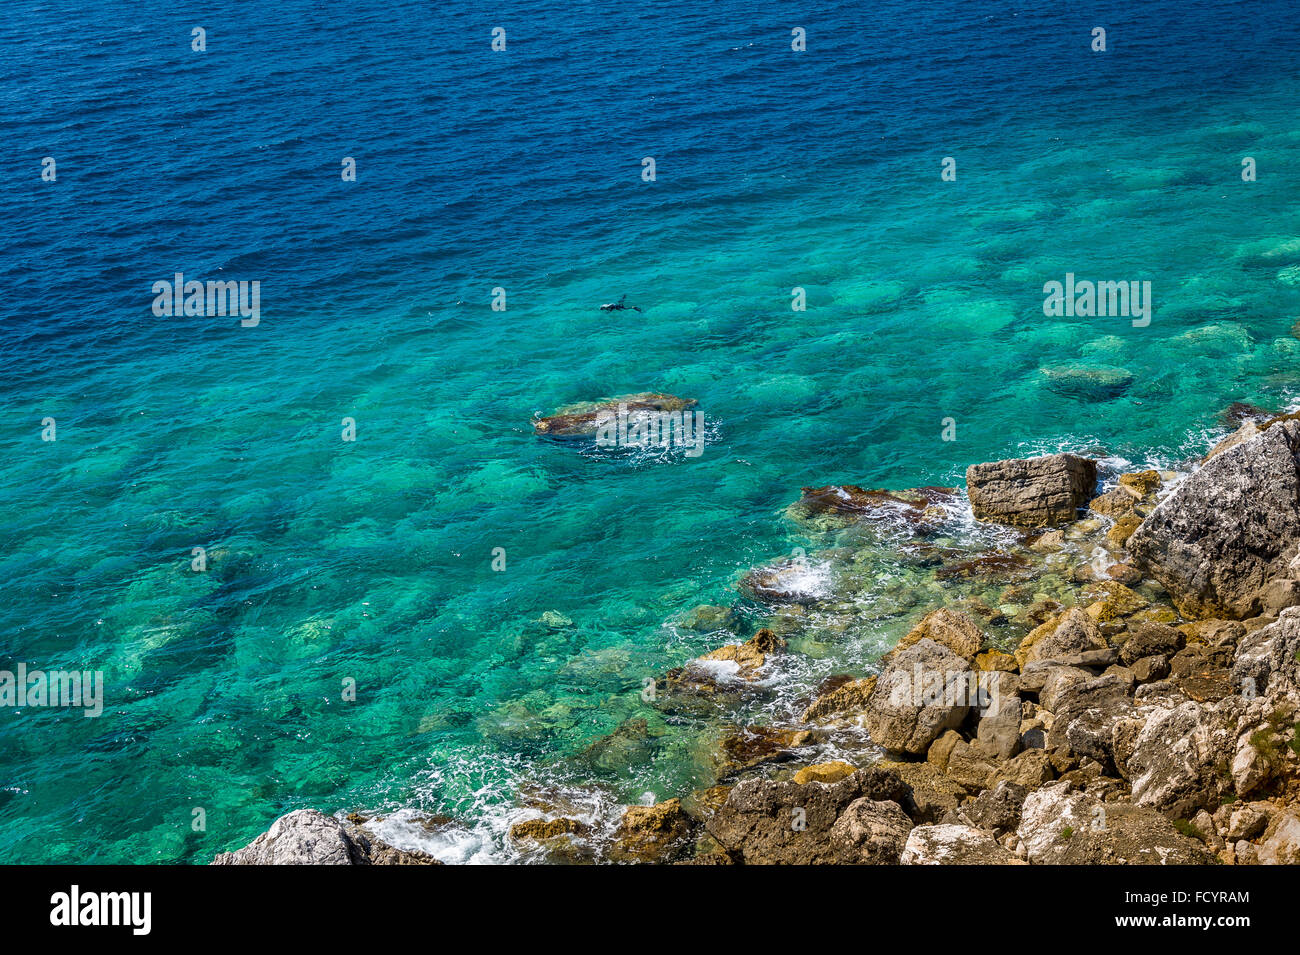 Buceo en el mar Adriático agua turquesa perfecta Foto de stock